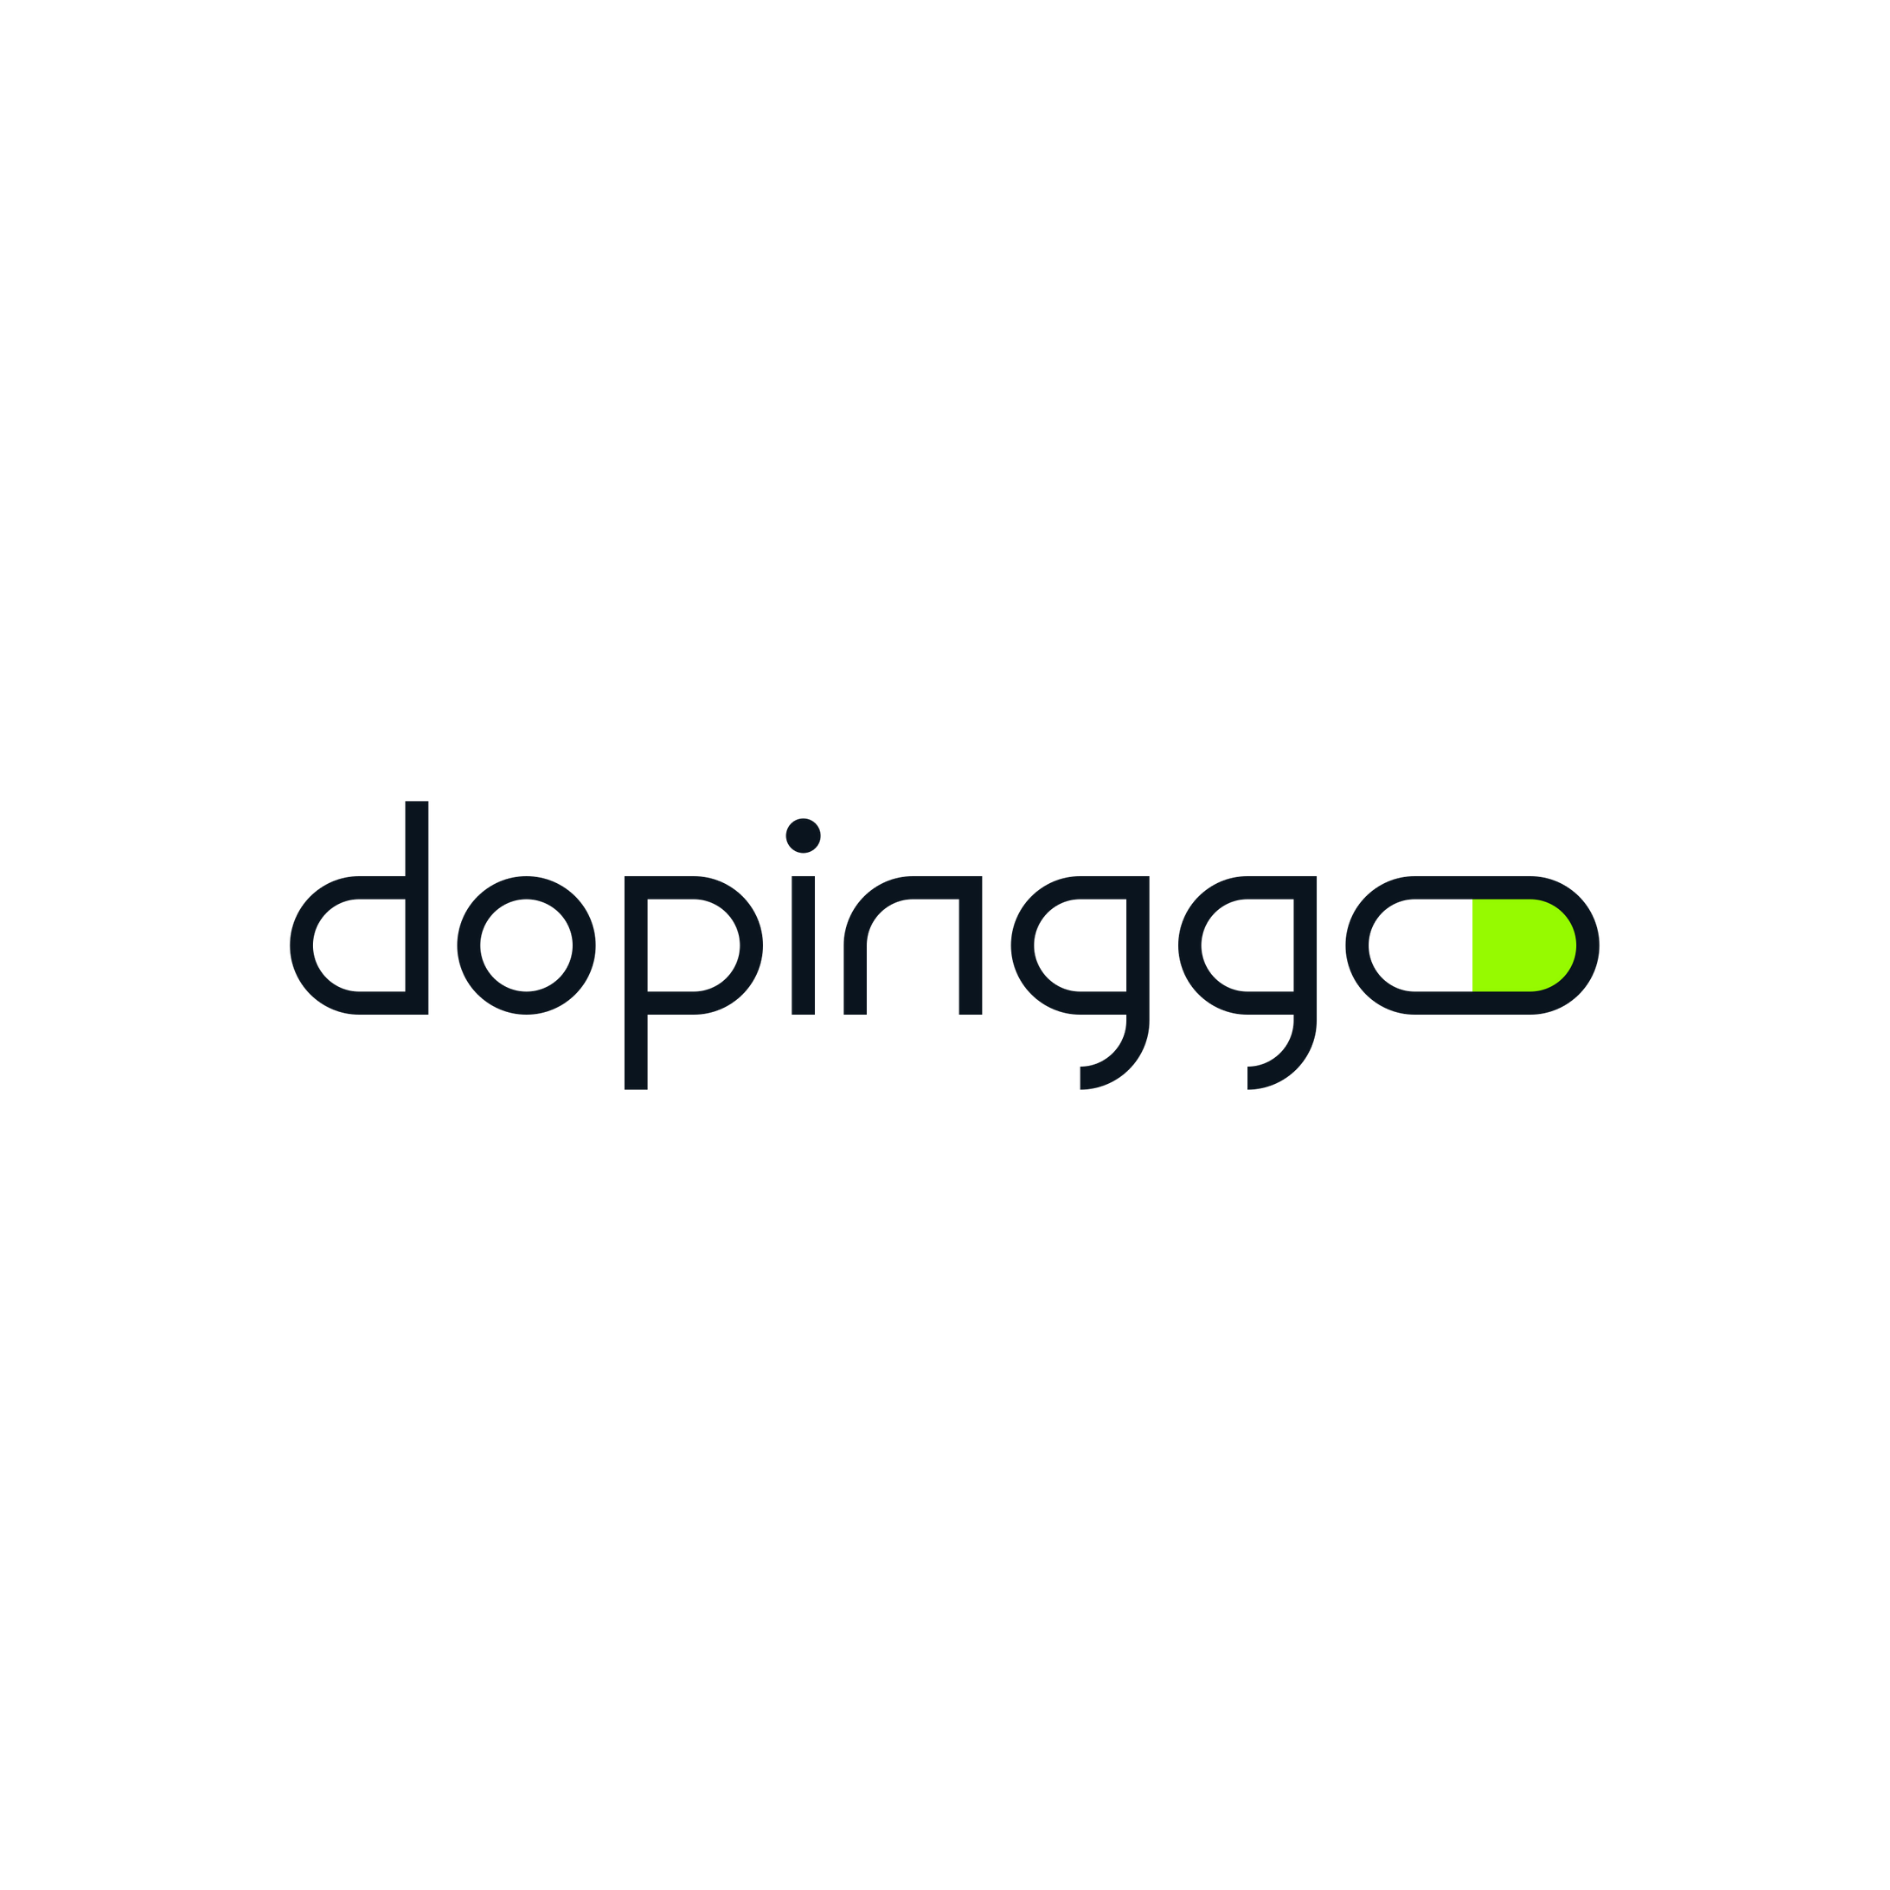 Dopinggo